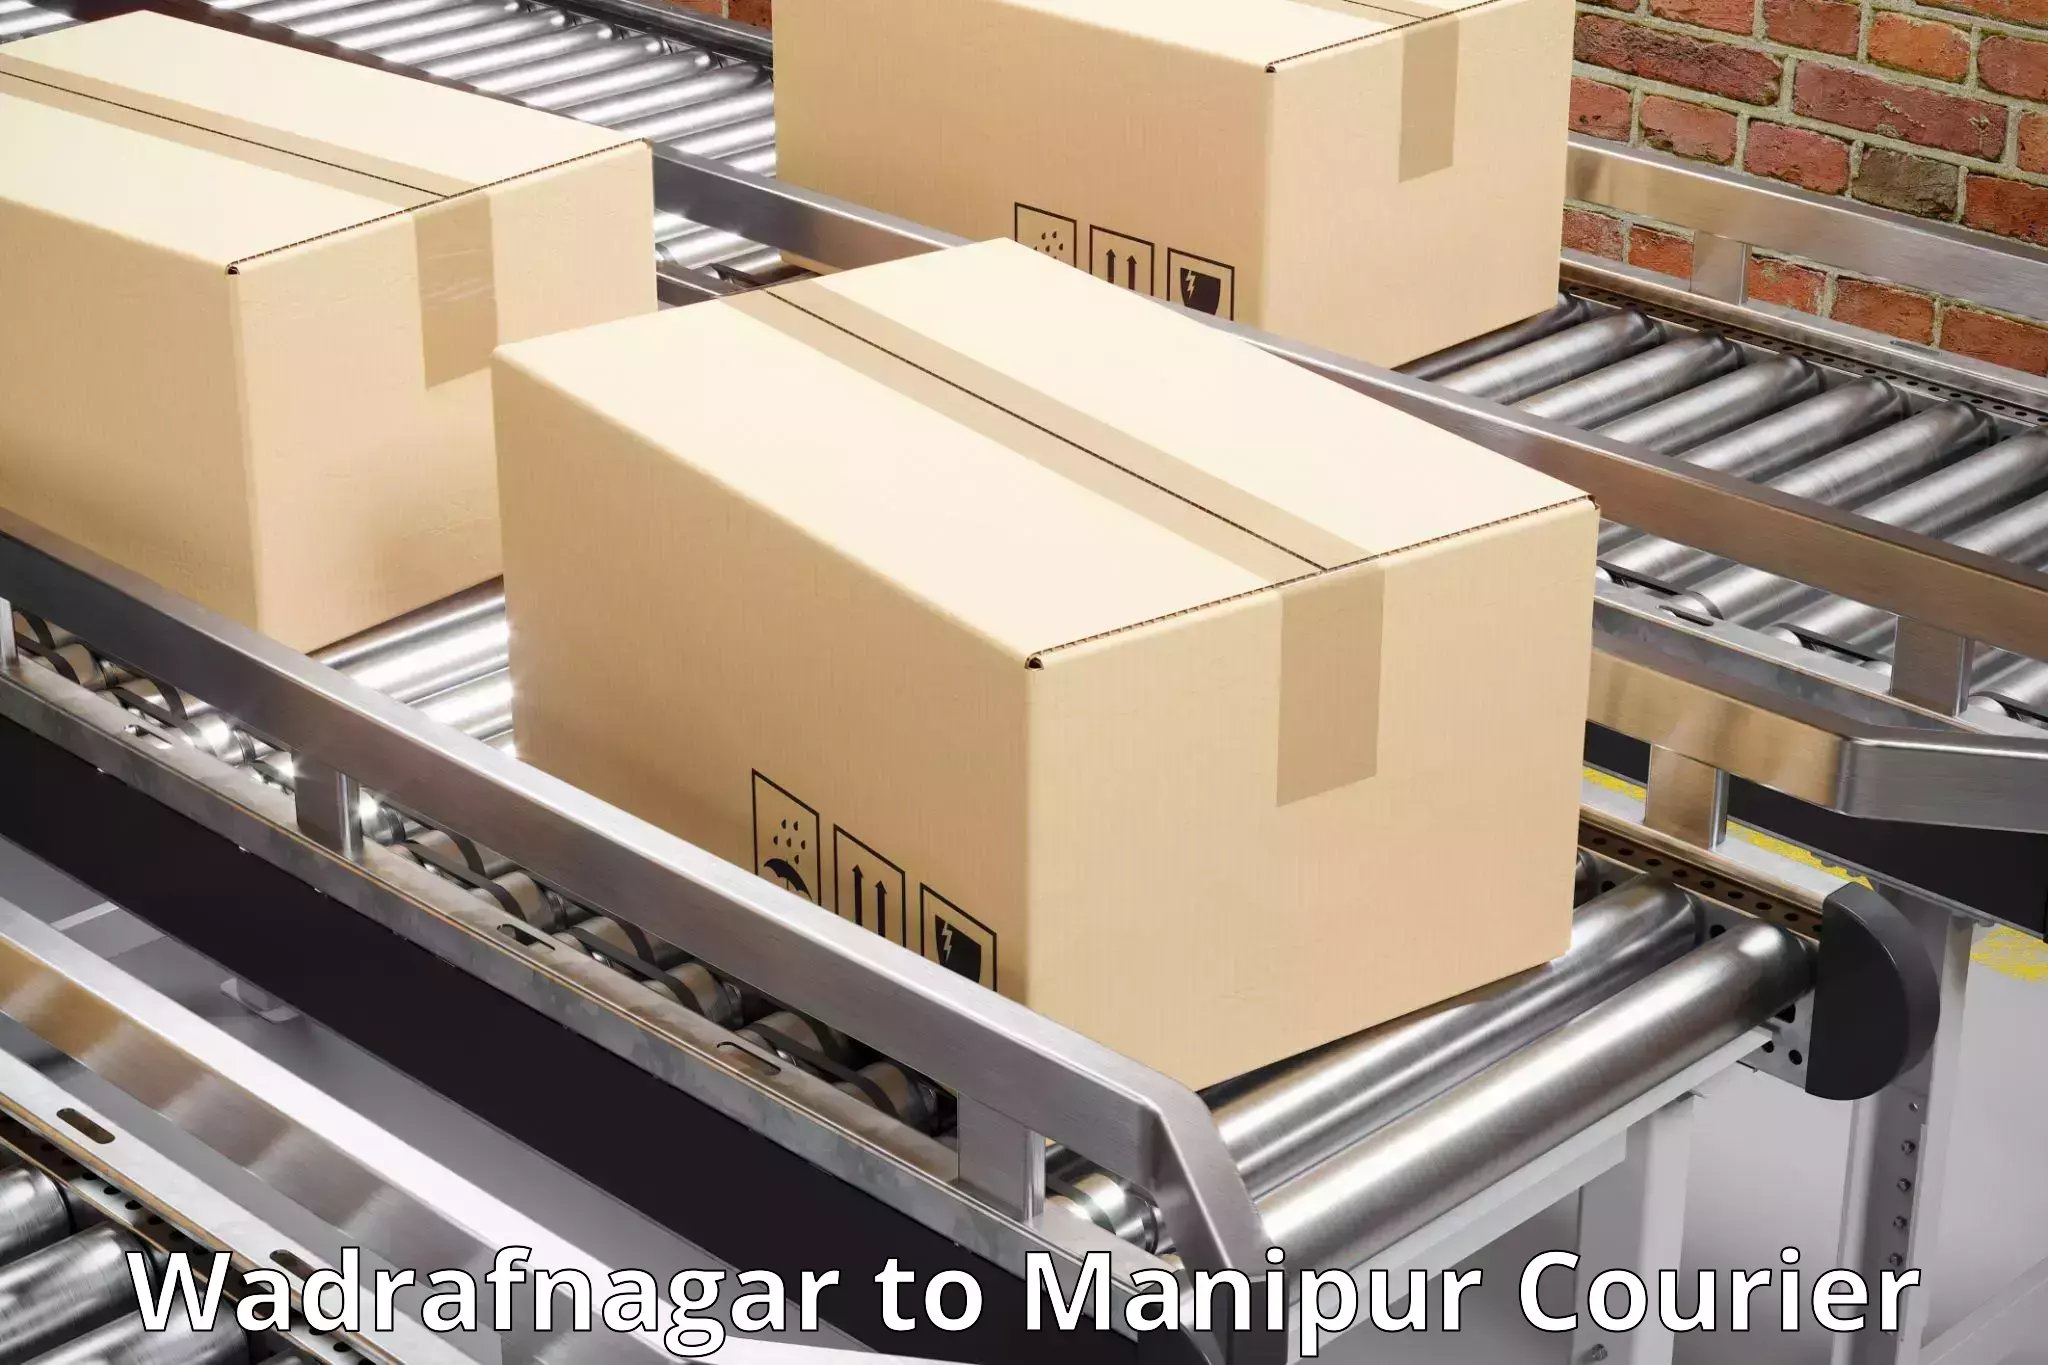 Digital courier platforms Wadrafnagar to Kanti